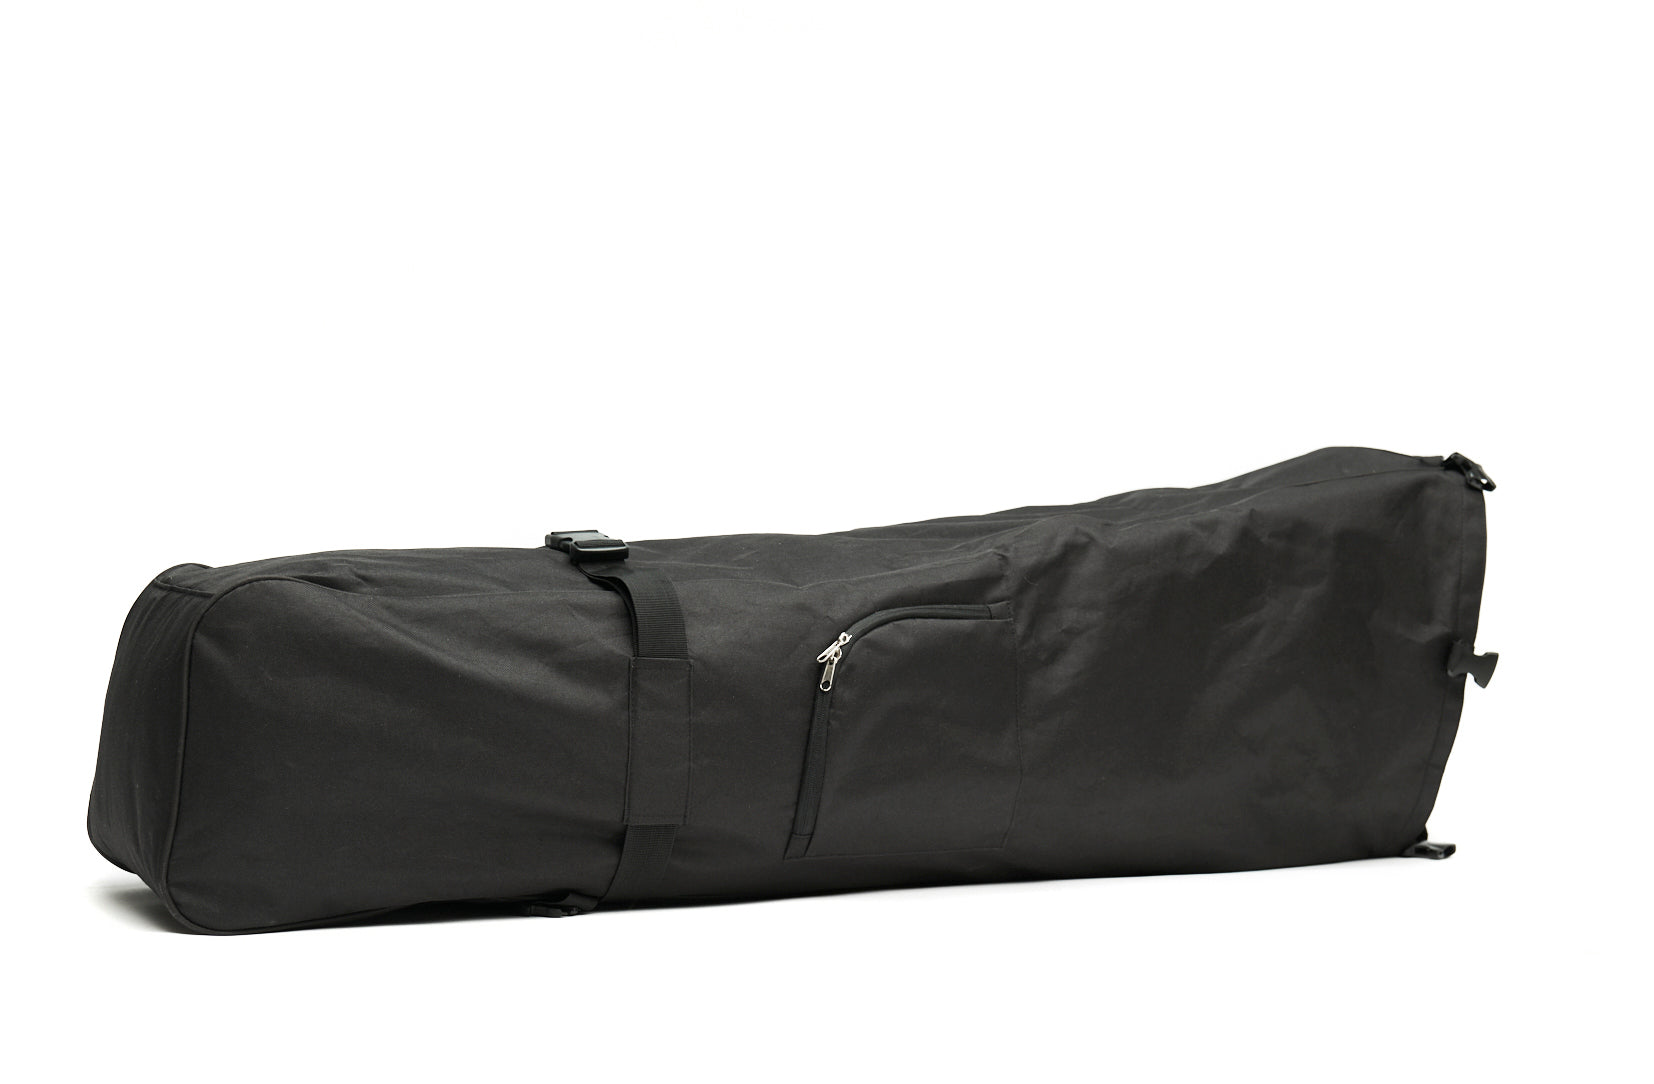 CarCareBags ski bag for the Tesla Model Y